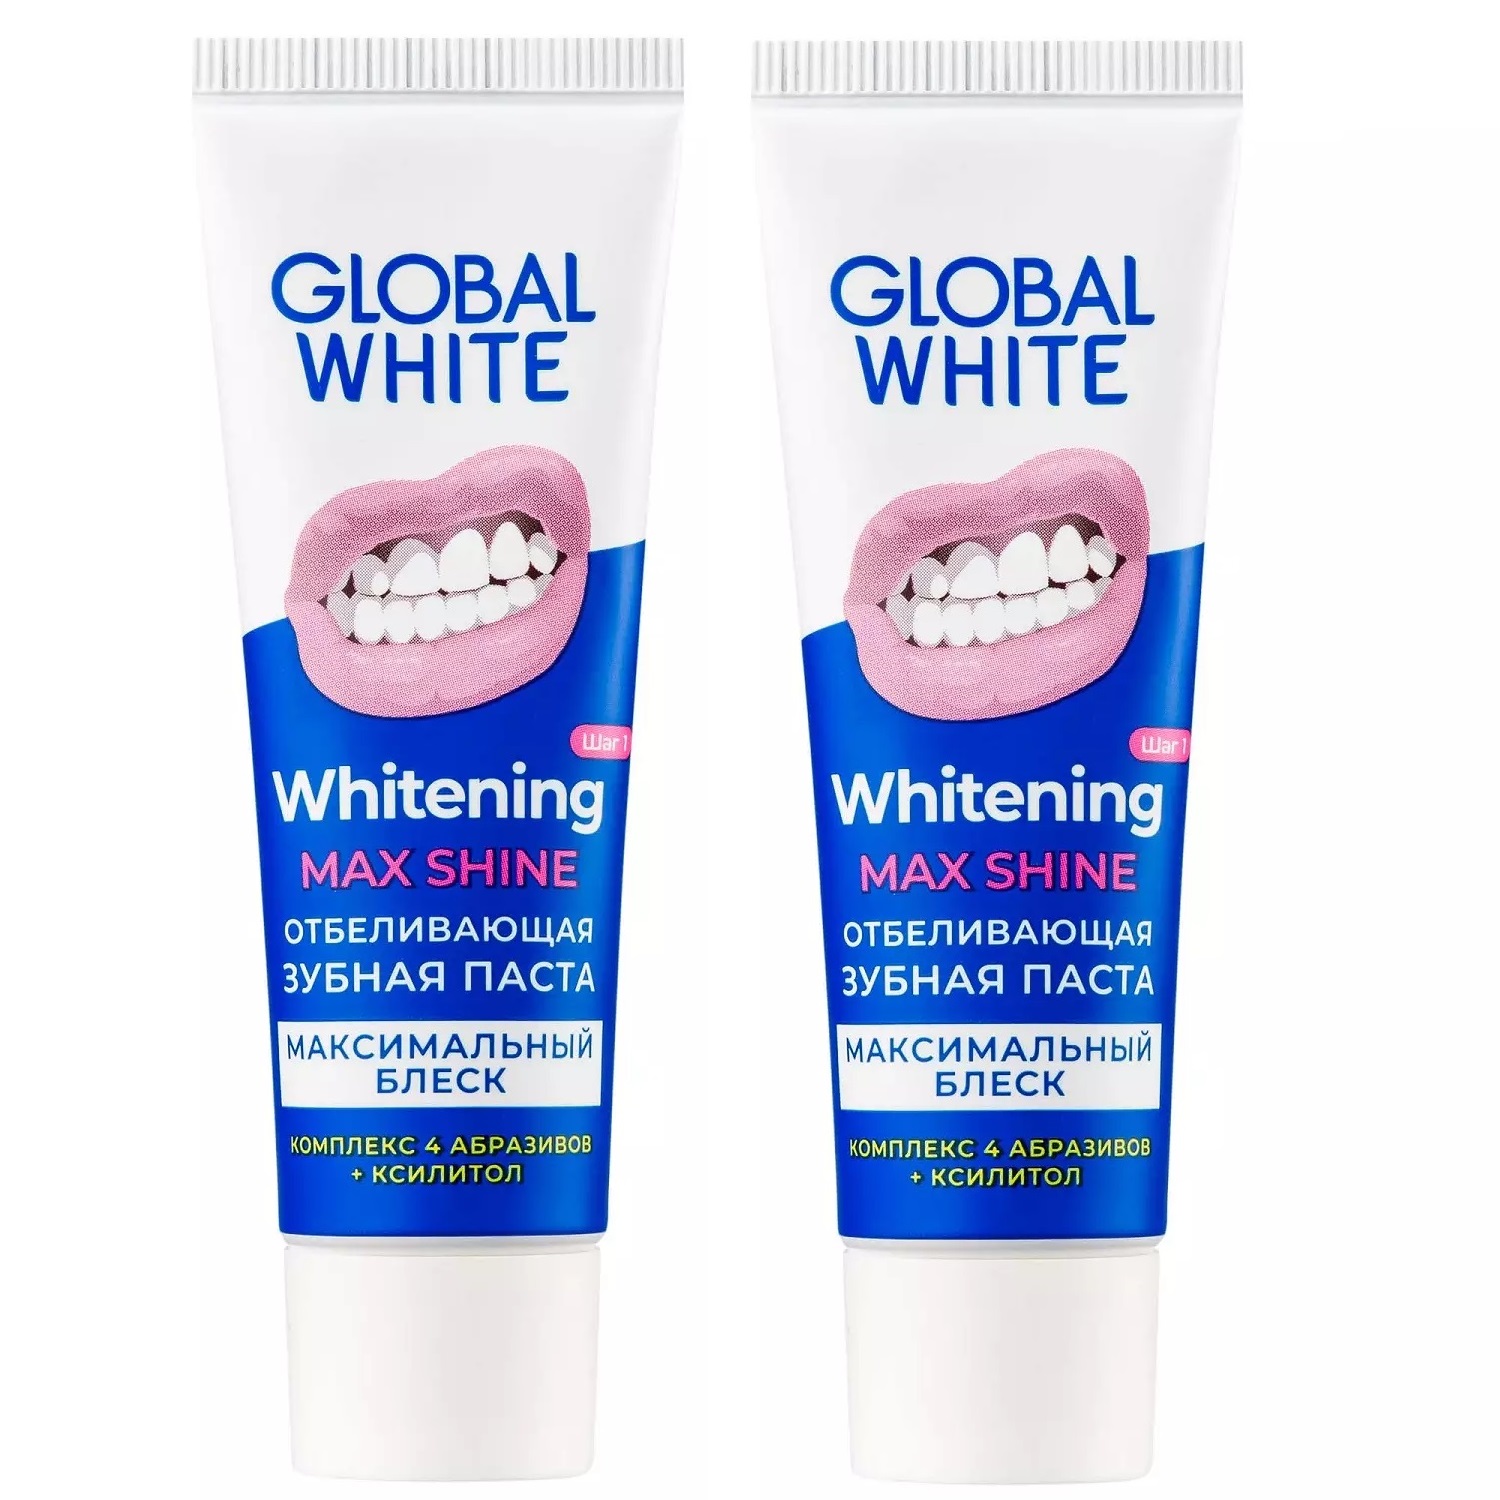 Global White Набор: отбеливающая зубная паста Max Shine, 2 х 30 мл (Global White, Подготовка к отбеливанию) зубная паста отбеливающая в таблетках 30 шт